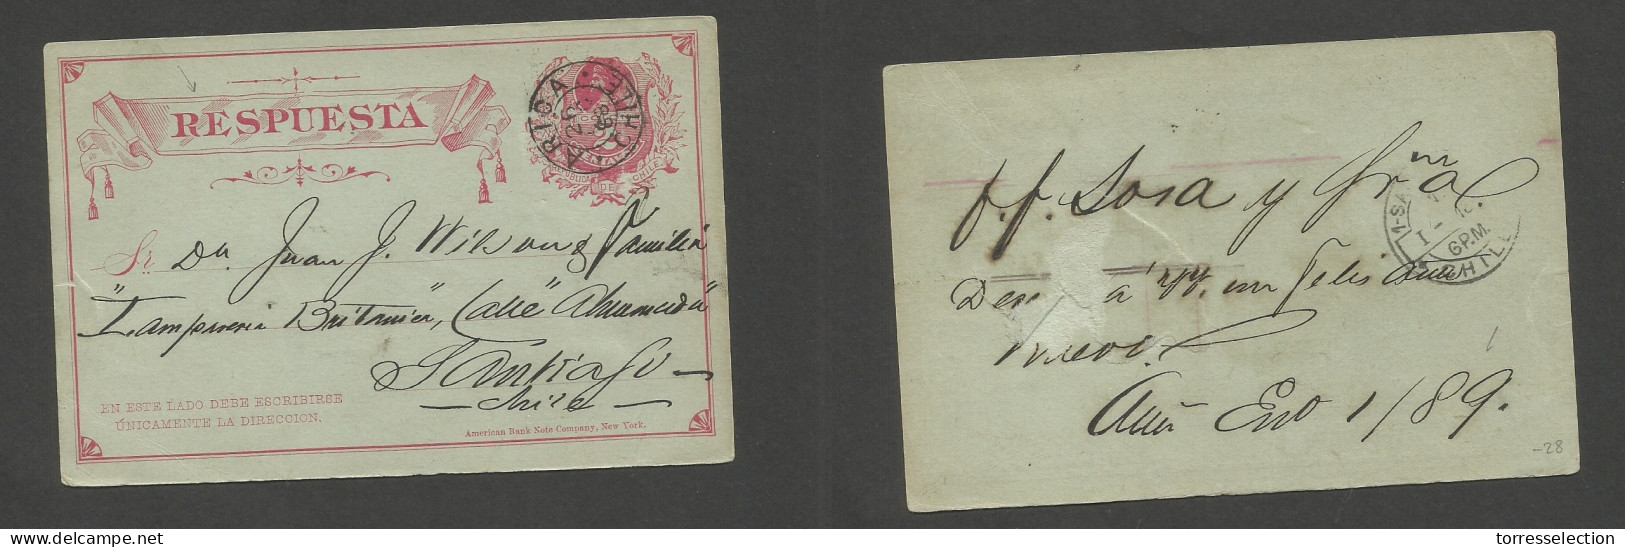 CHILE - Stationery. 1888 (26 Dec) REPLY Half. Proper Usage Back. Arica - Stgo (1 Jan 1889) 2c Red Stat Card. SALE. - Cile